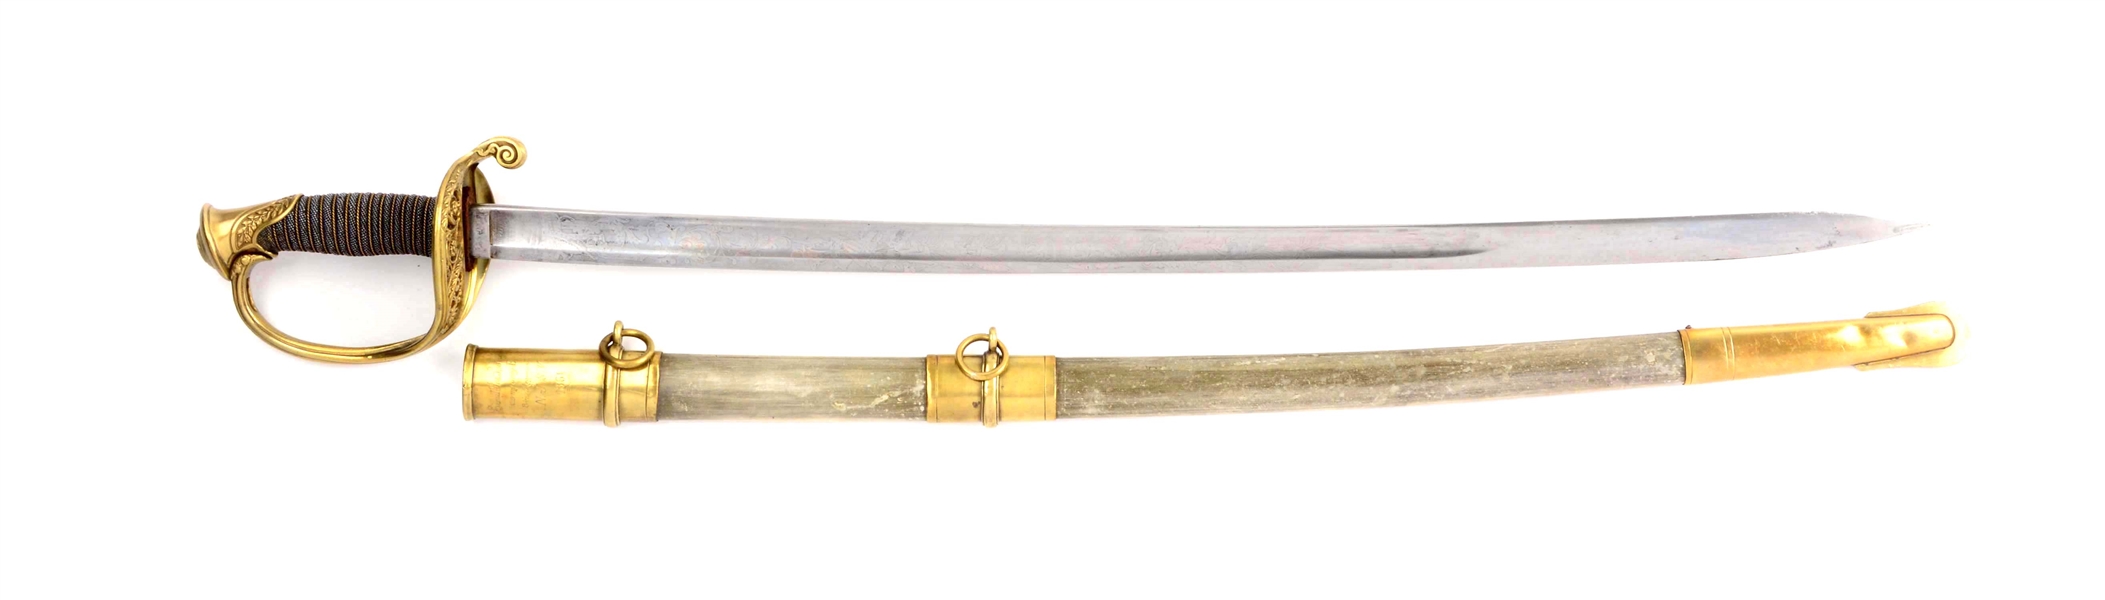 U.S. MODEL 1850 FOOT OFFICERS PRESENTATION SWORD TO LIEUTENANT JAMES LONG NEW JERSEY DATED 1861.